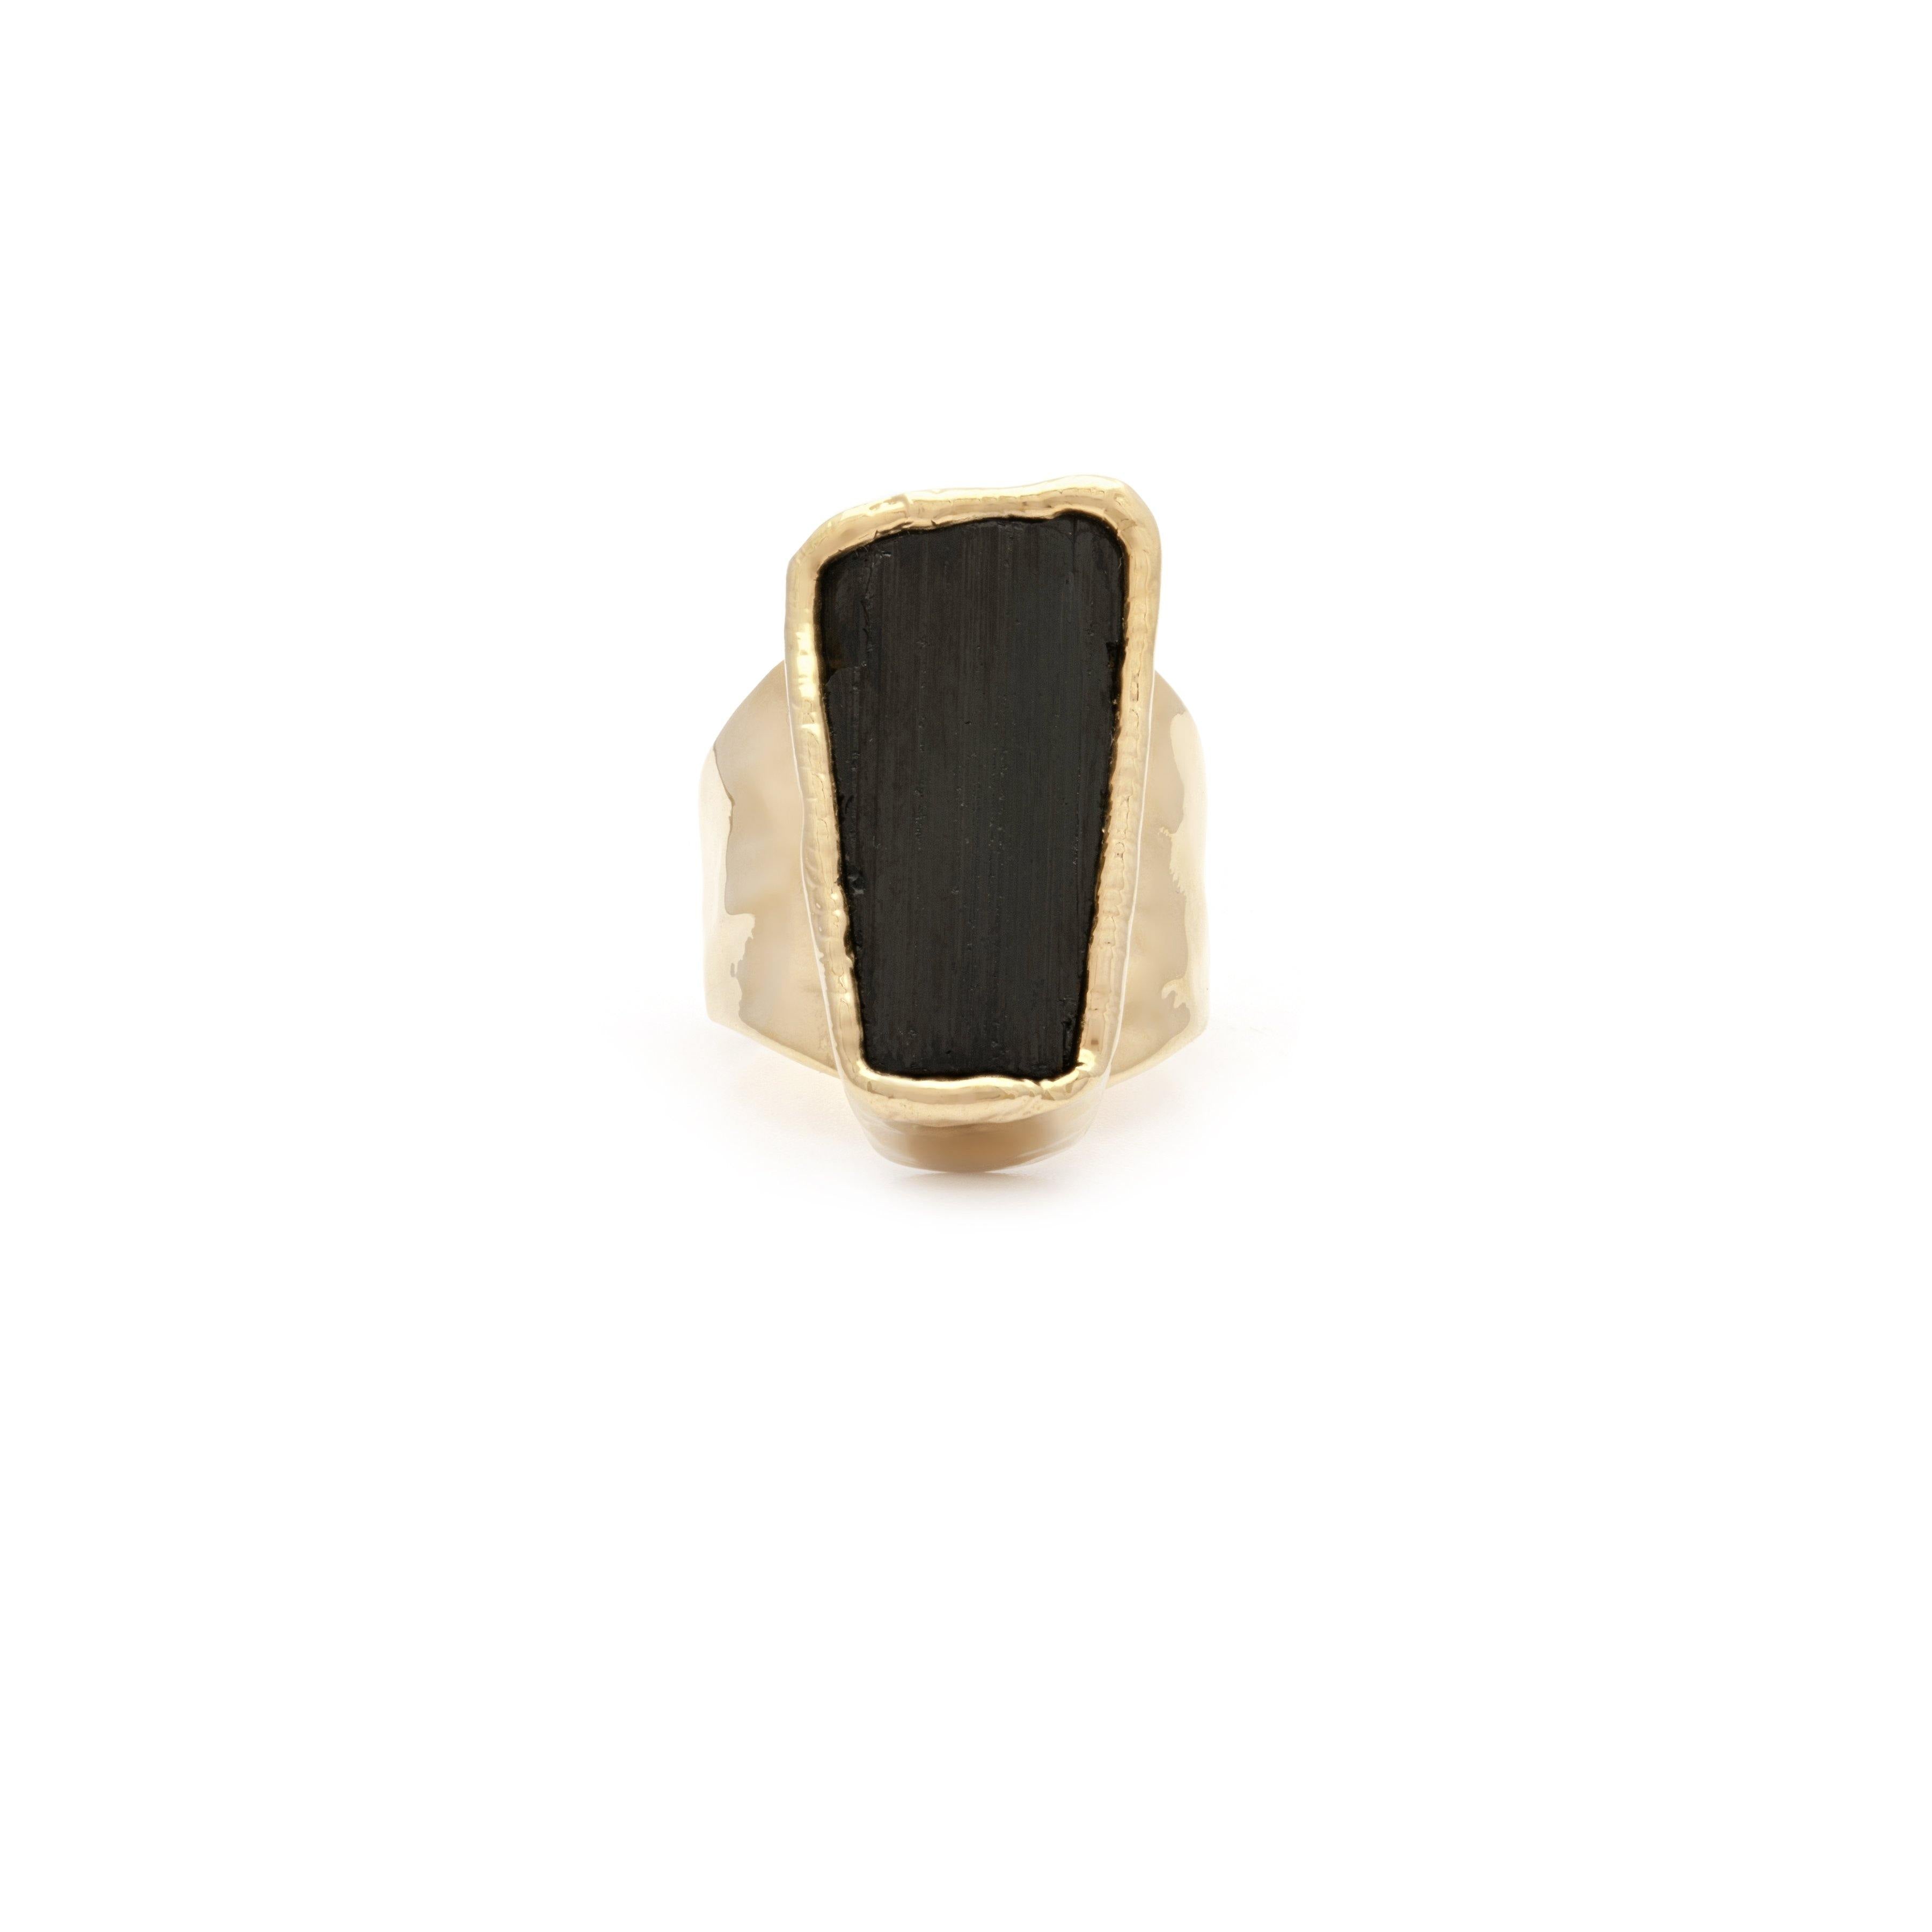 Black Tourmaline Ring - Irit Sorokin Designs Jewelry